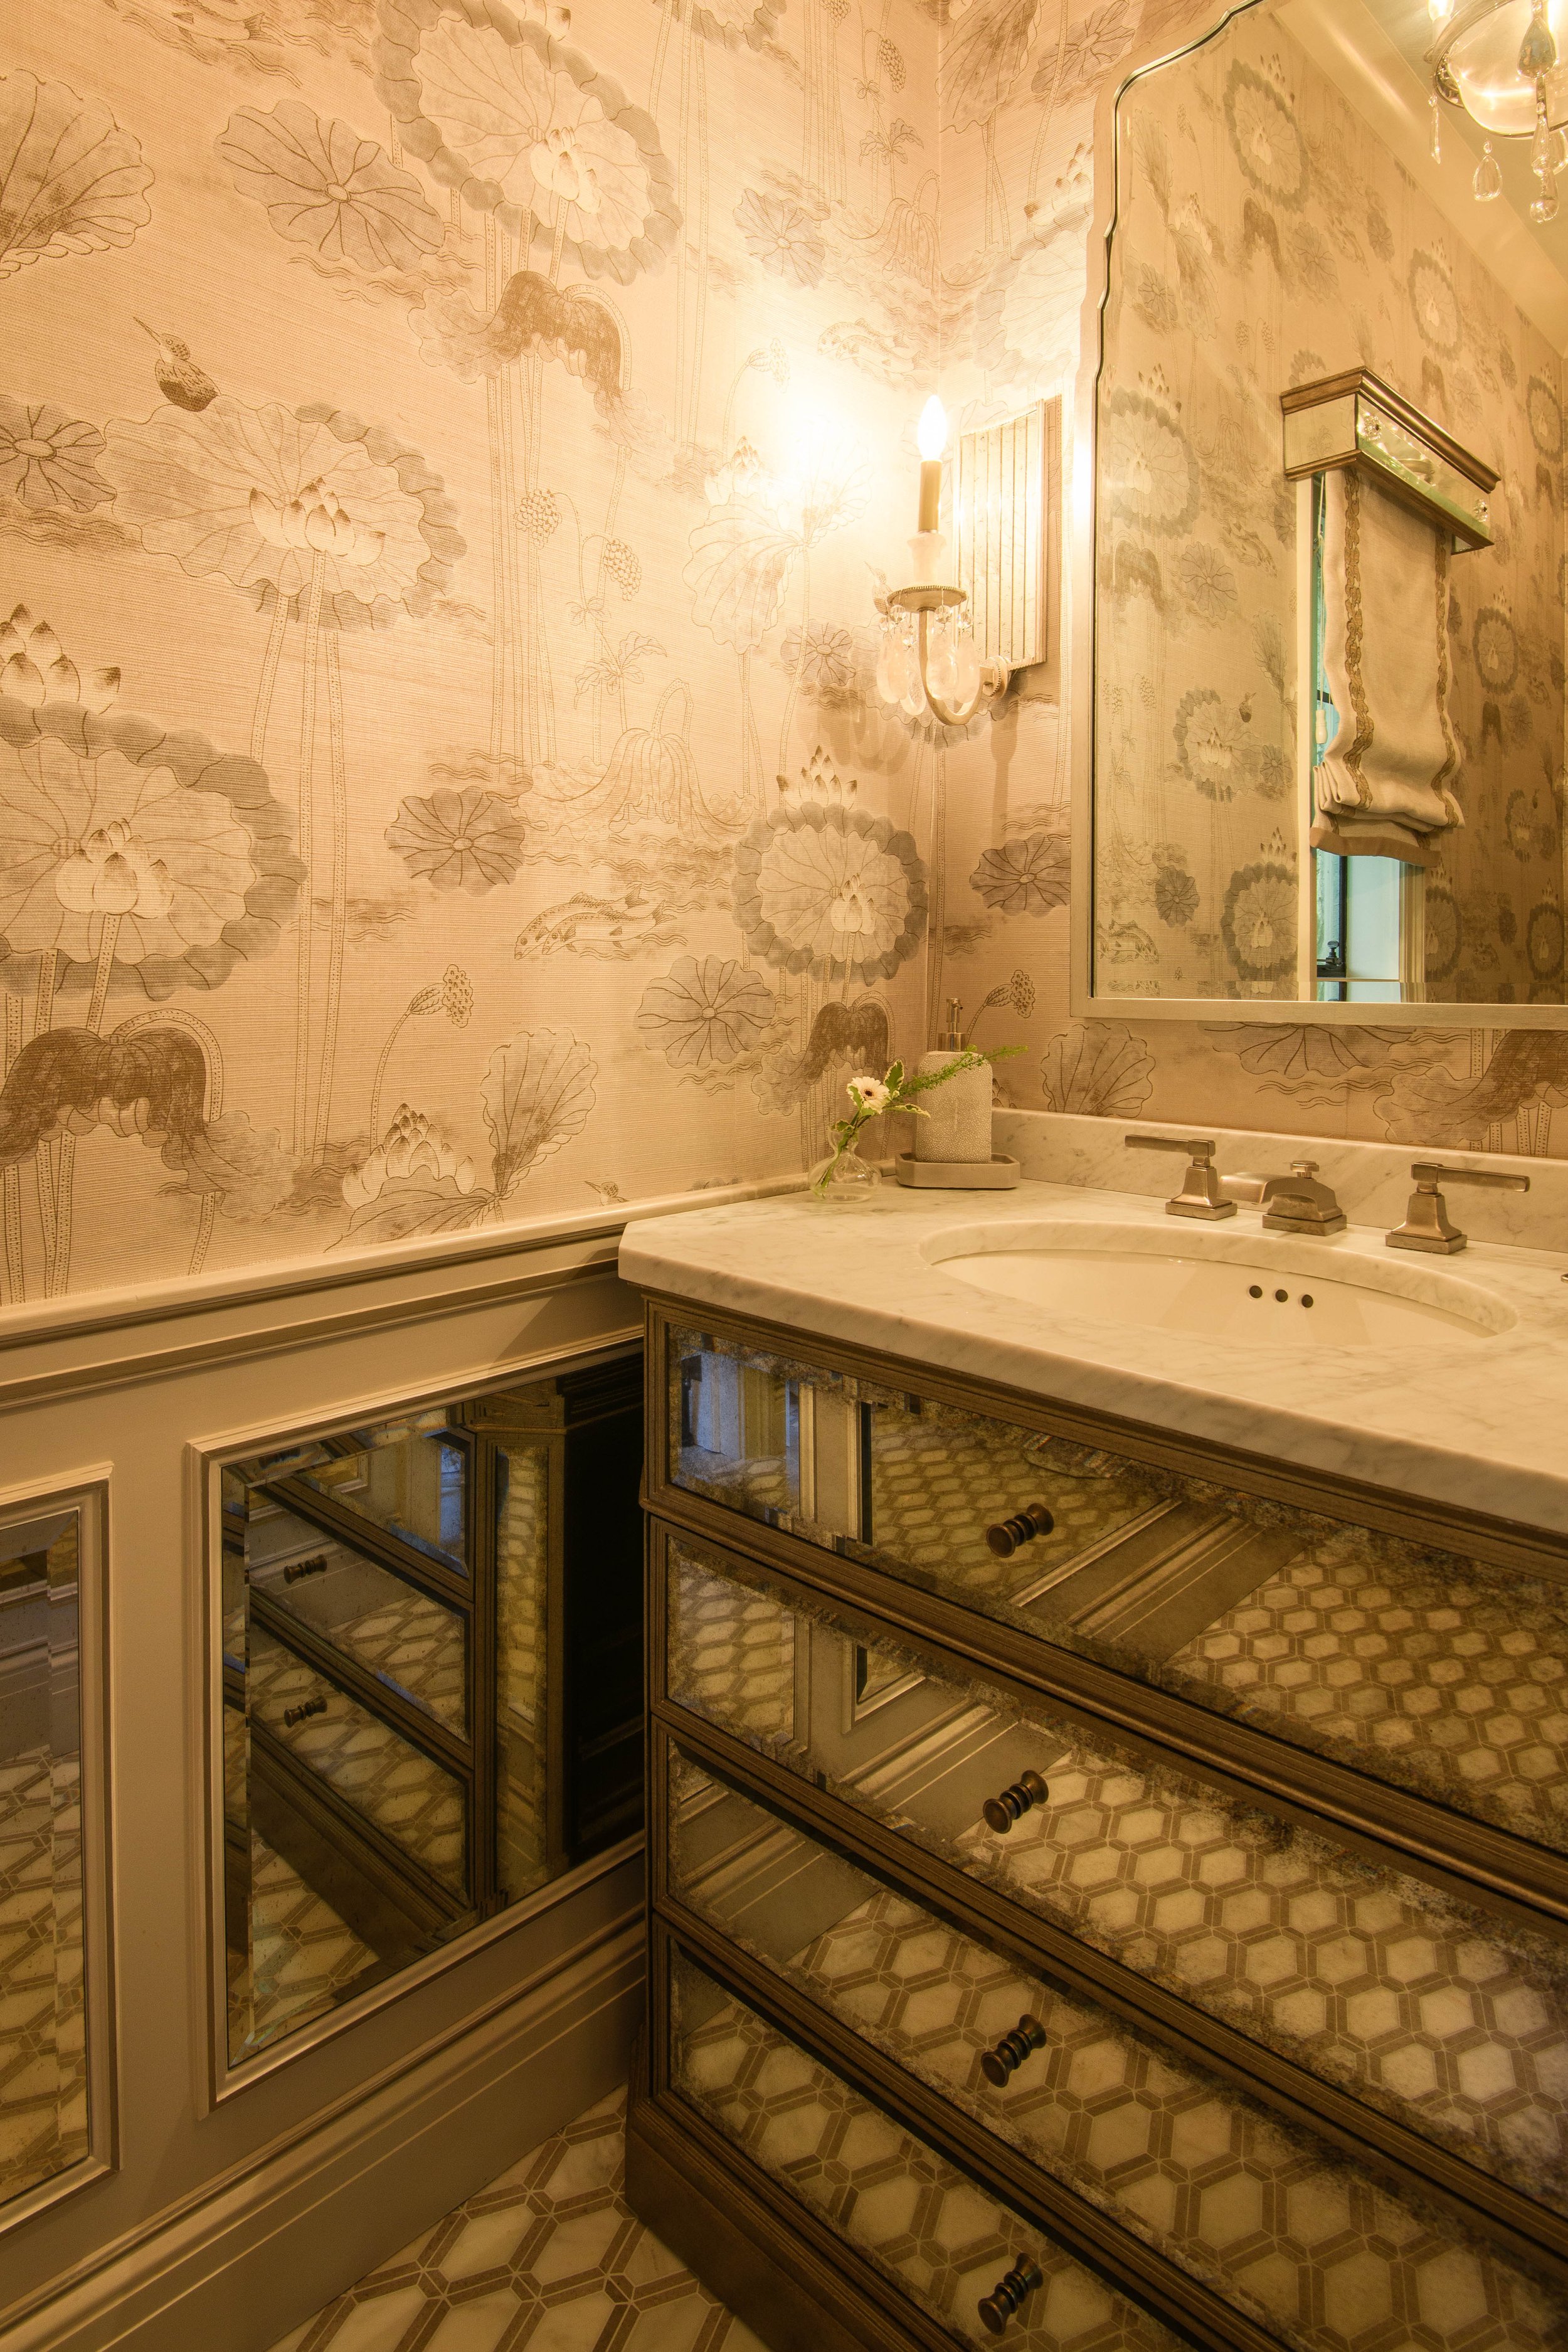 21-patterned-wallpaper-mirror-drawers-washroom--westechester-rinfret-interior-designs-classy.jpg